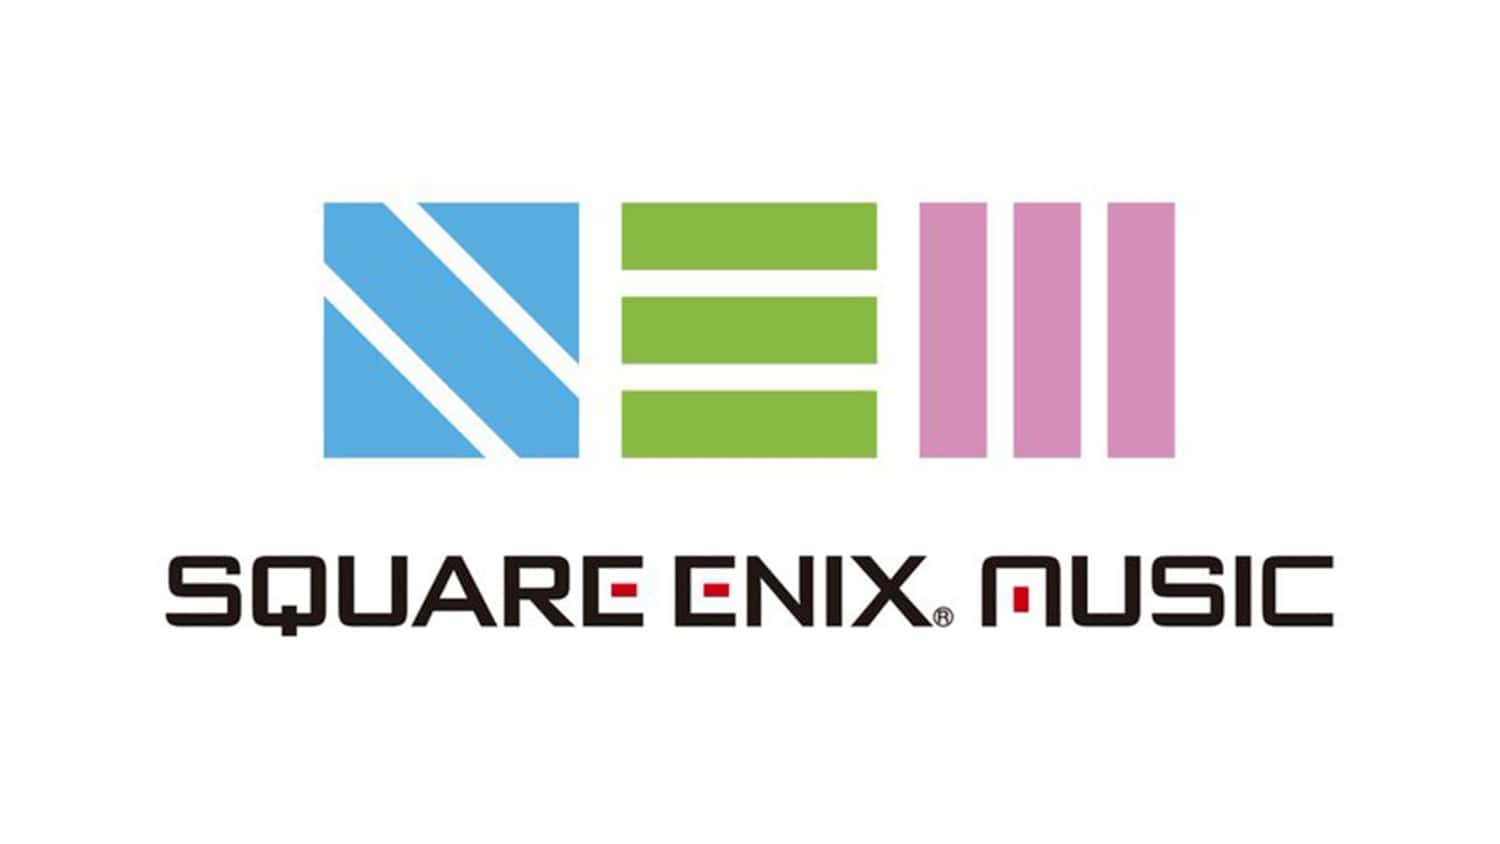 SQUARE ENIX MUSICが「YouTube Music」に参入。約6000曲の楽曲が視聴可能に